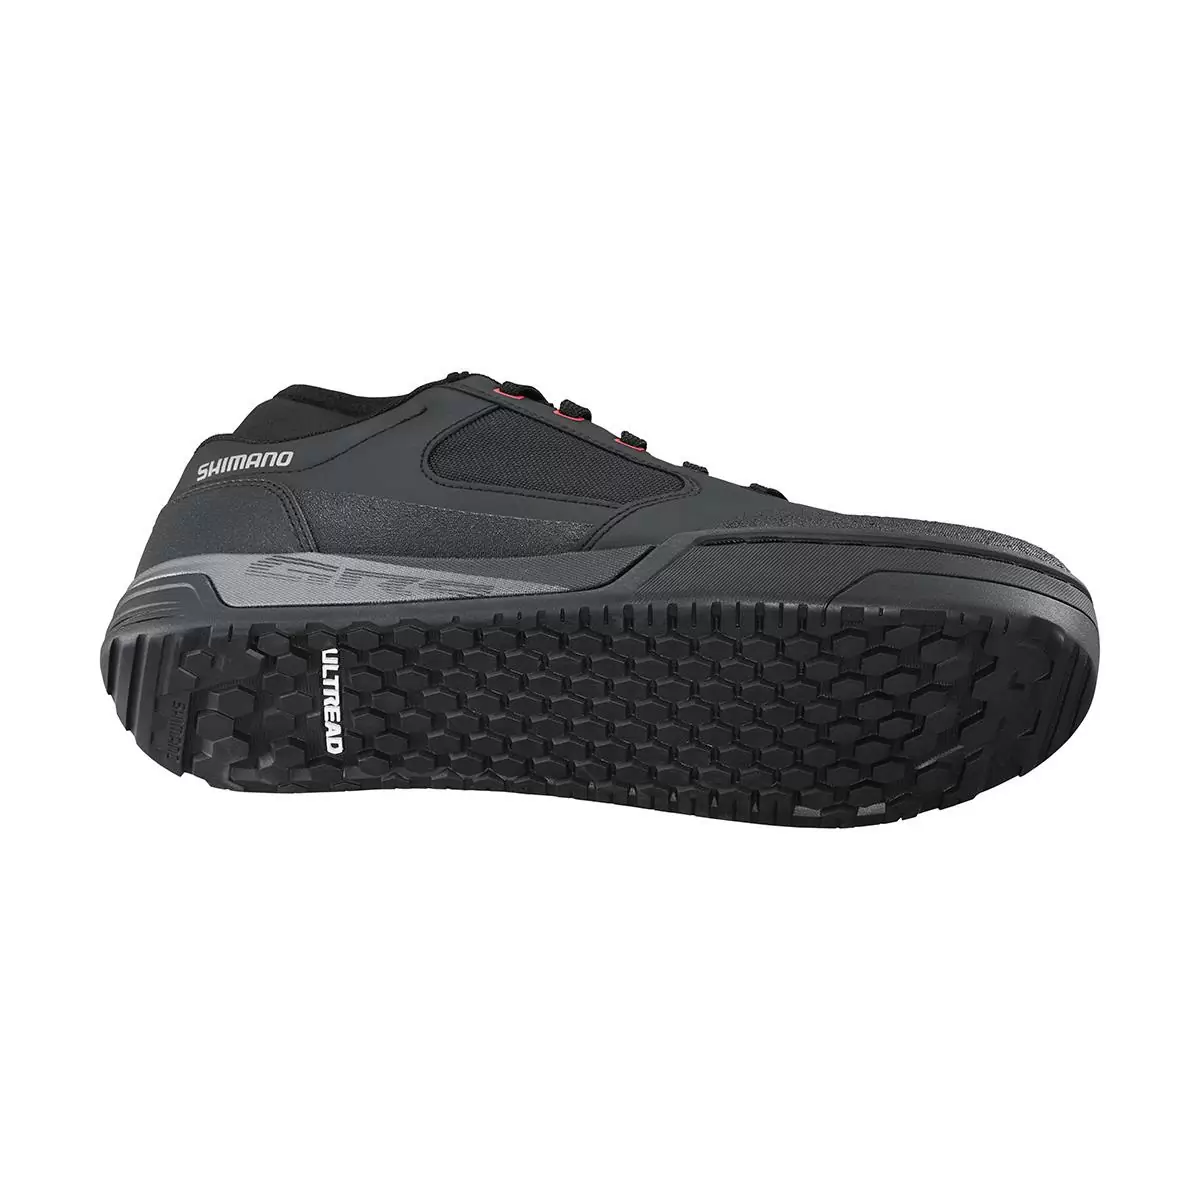 Flache MTB-Schuhe GR903 SH-GR903 schwarz Größe 43 #2